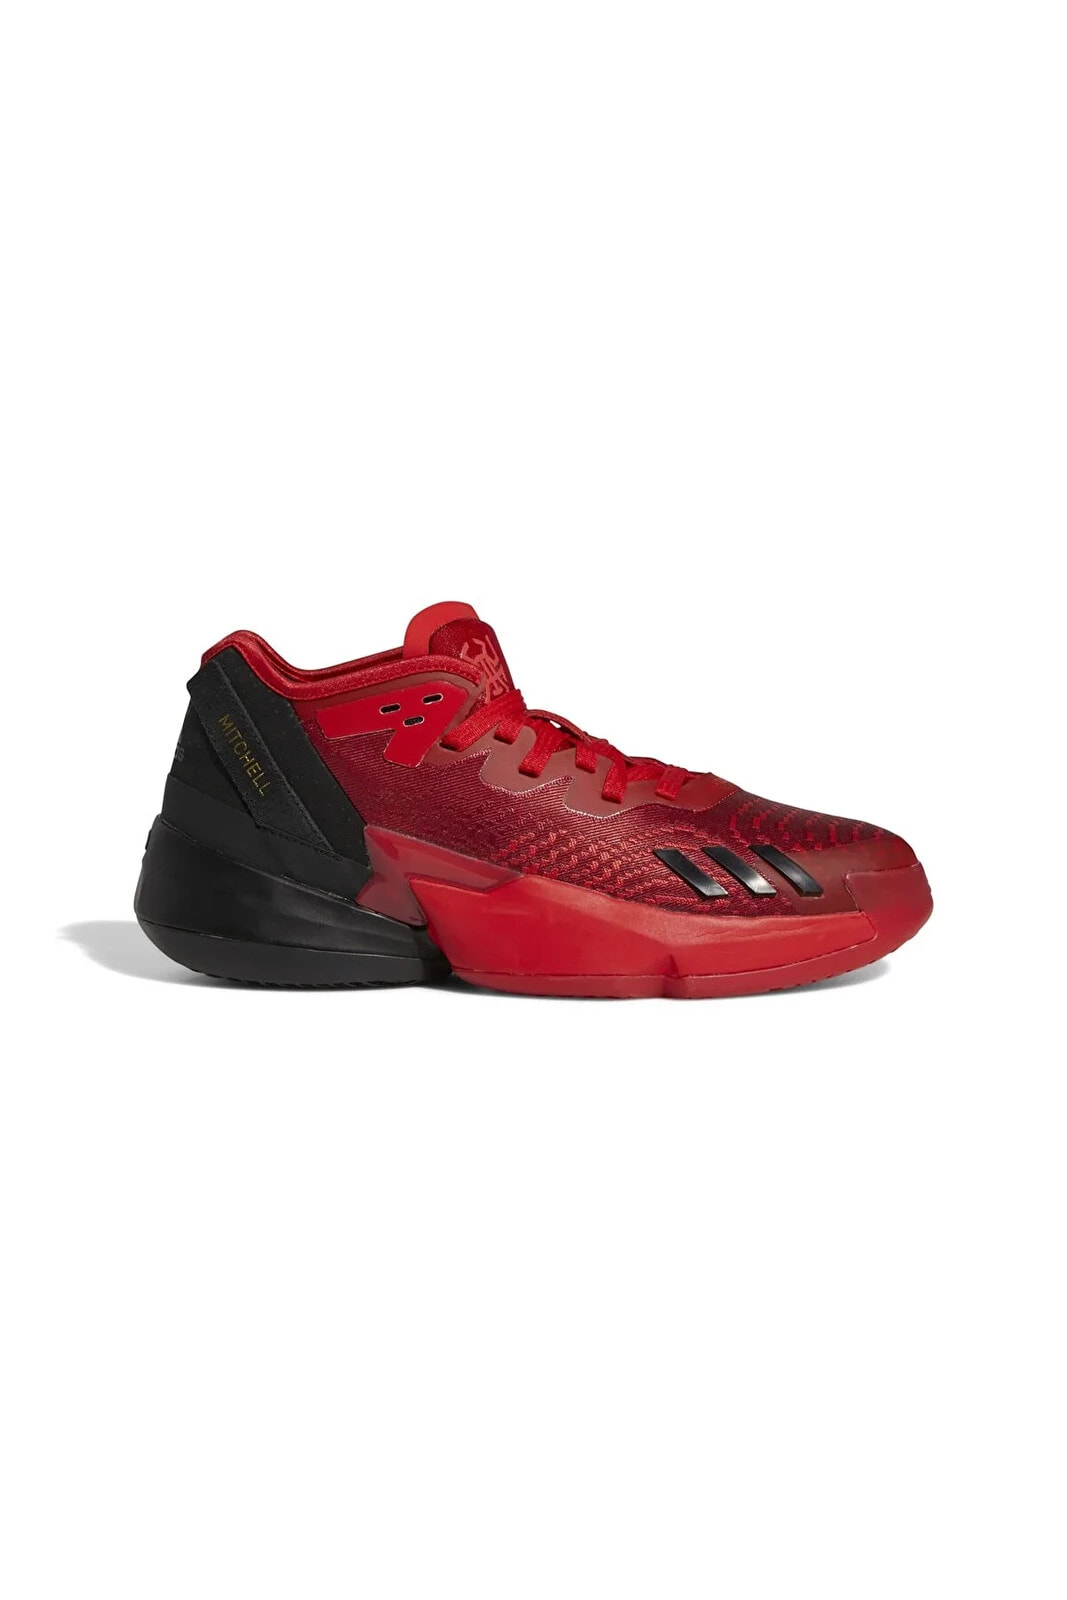 Kırmızı - Siyah Erkek Basketbol Ayakkabısı Gx6886 D.o.n. Issue 4